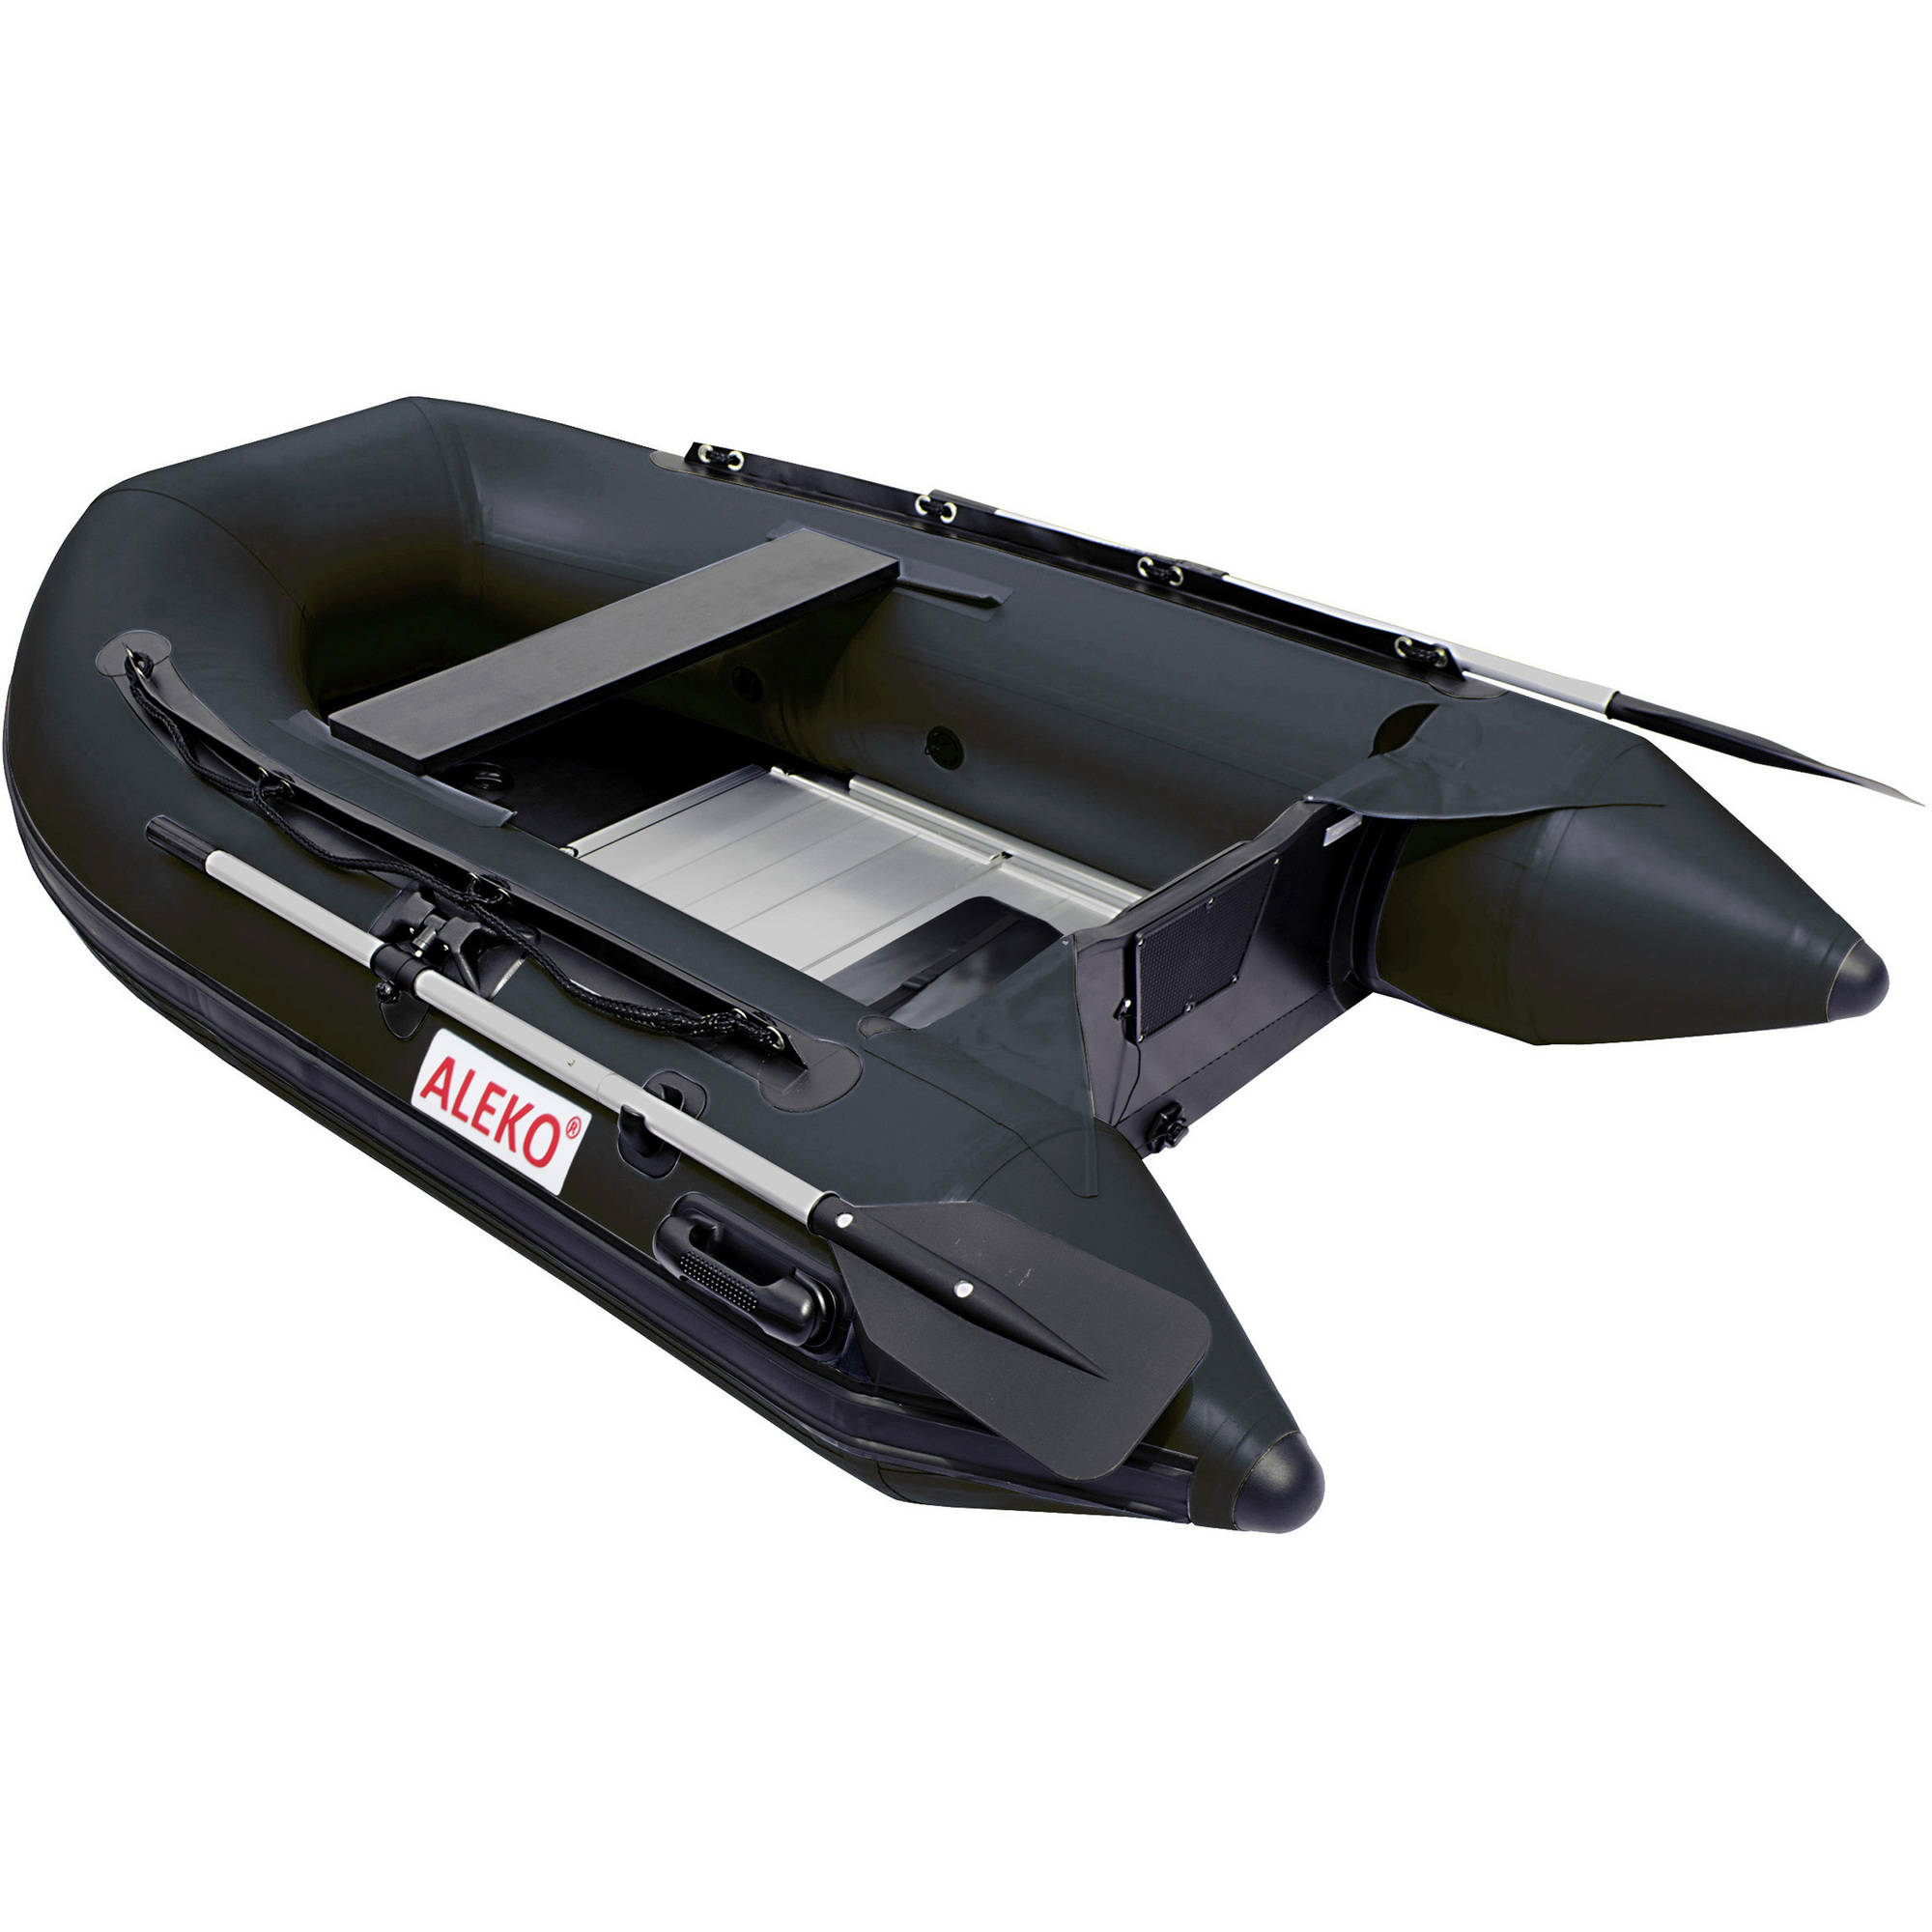 ALEKO 8.4 Feet Inflatable Boat with Aluminum Floor